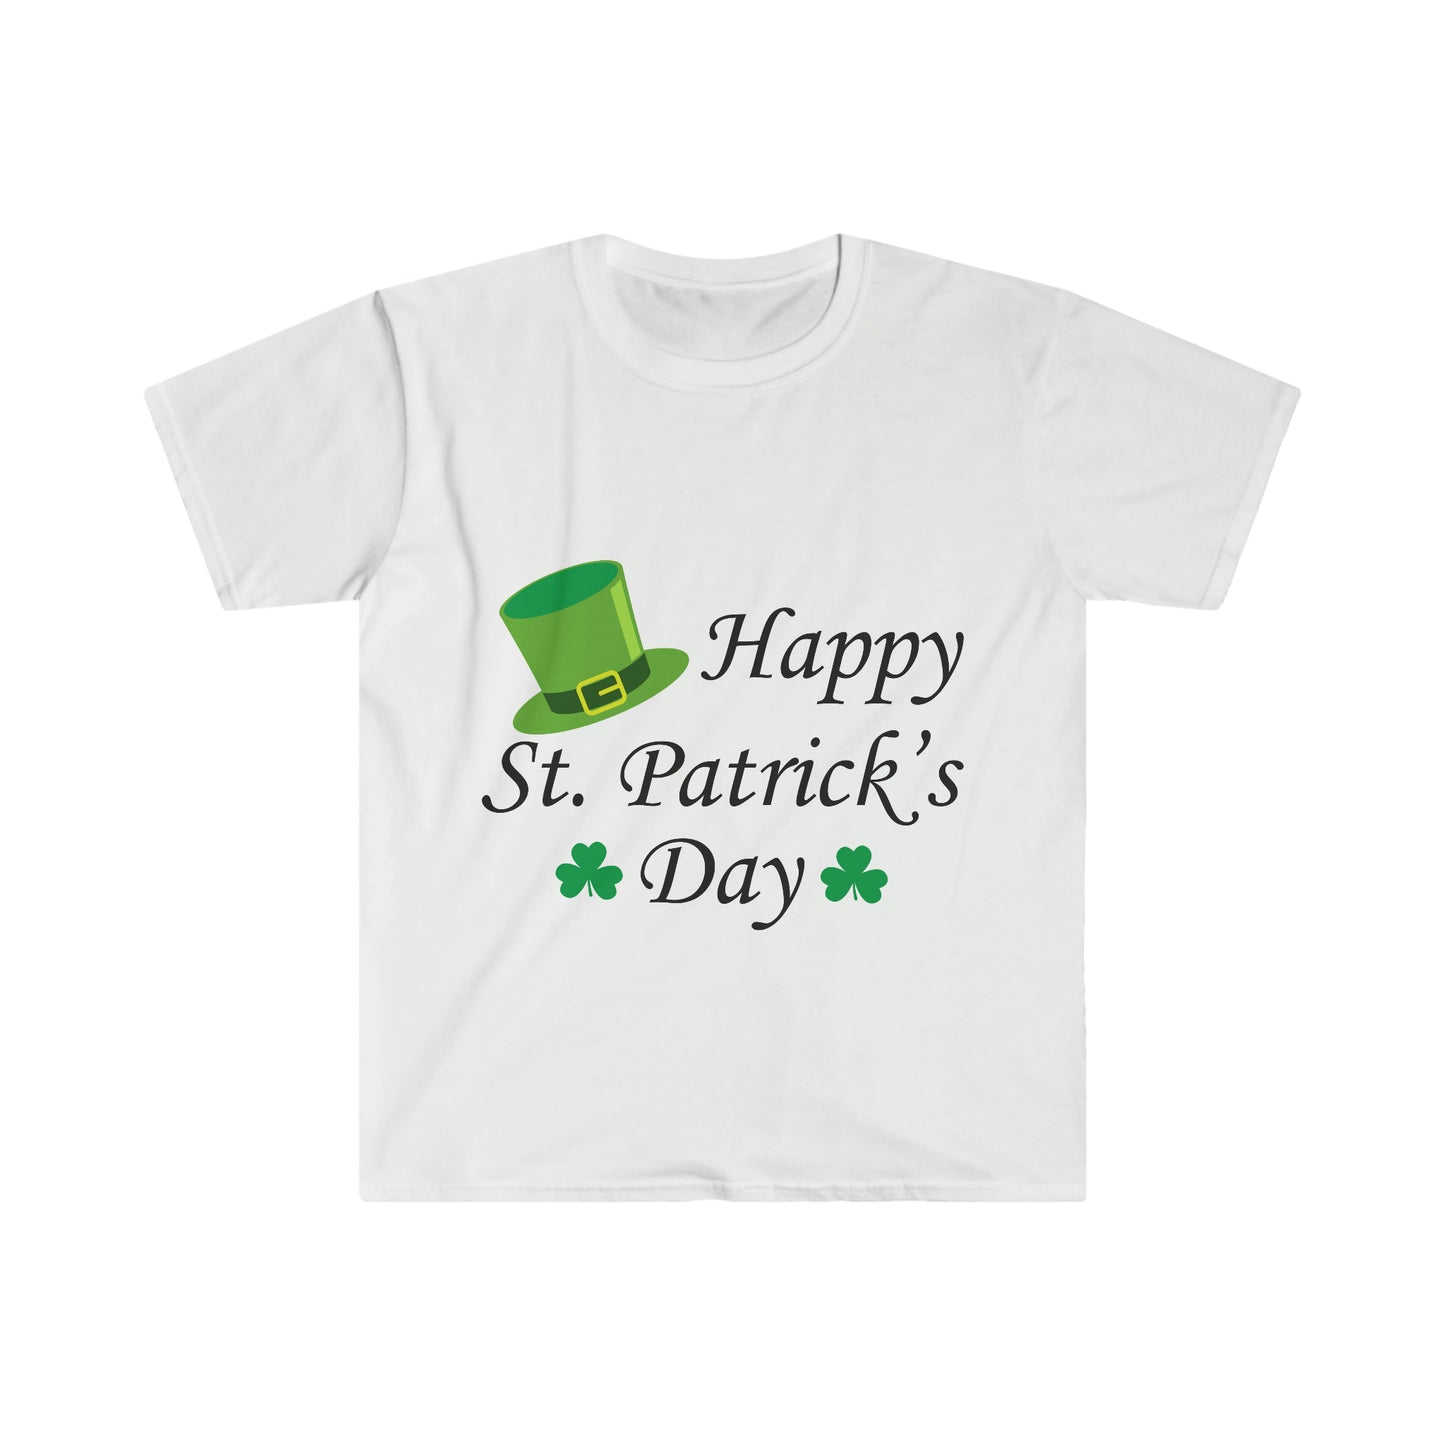 'Happy St. Patrick's Day 4' Essential Comfort Tee